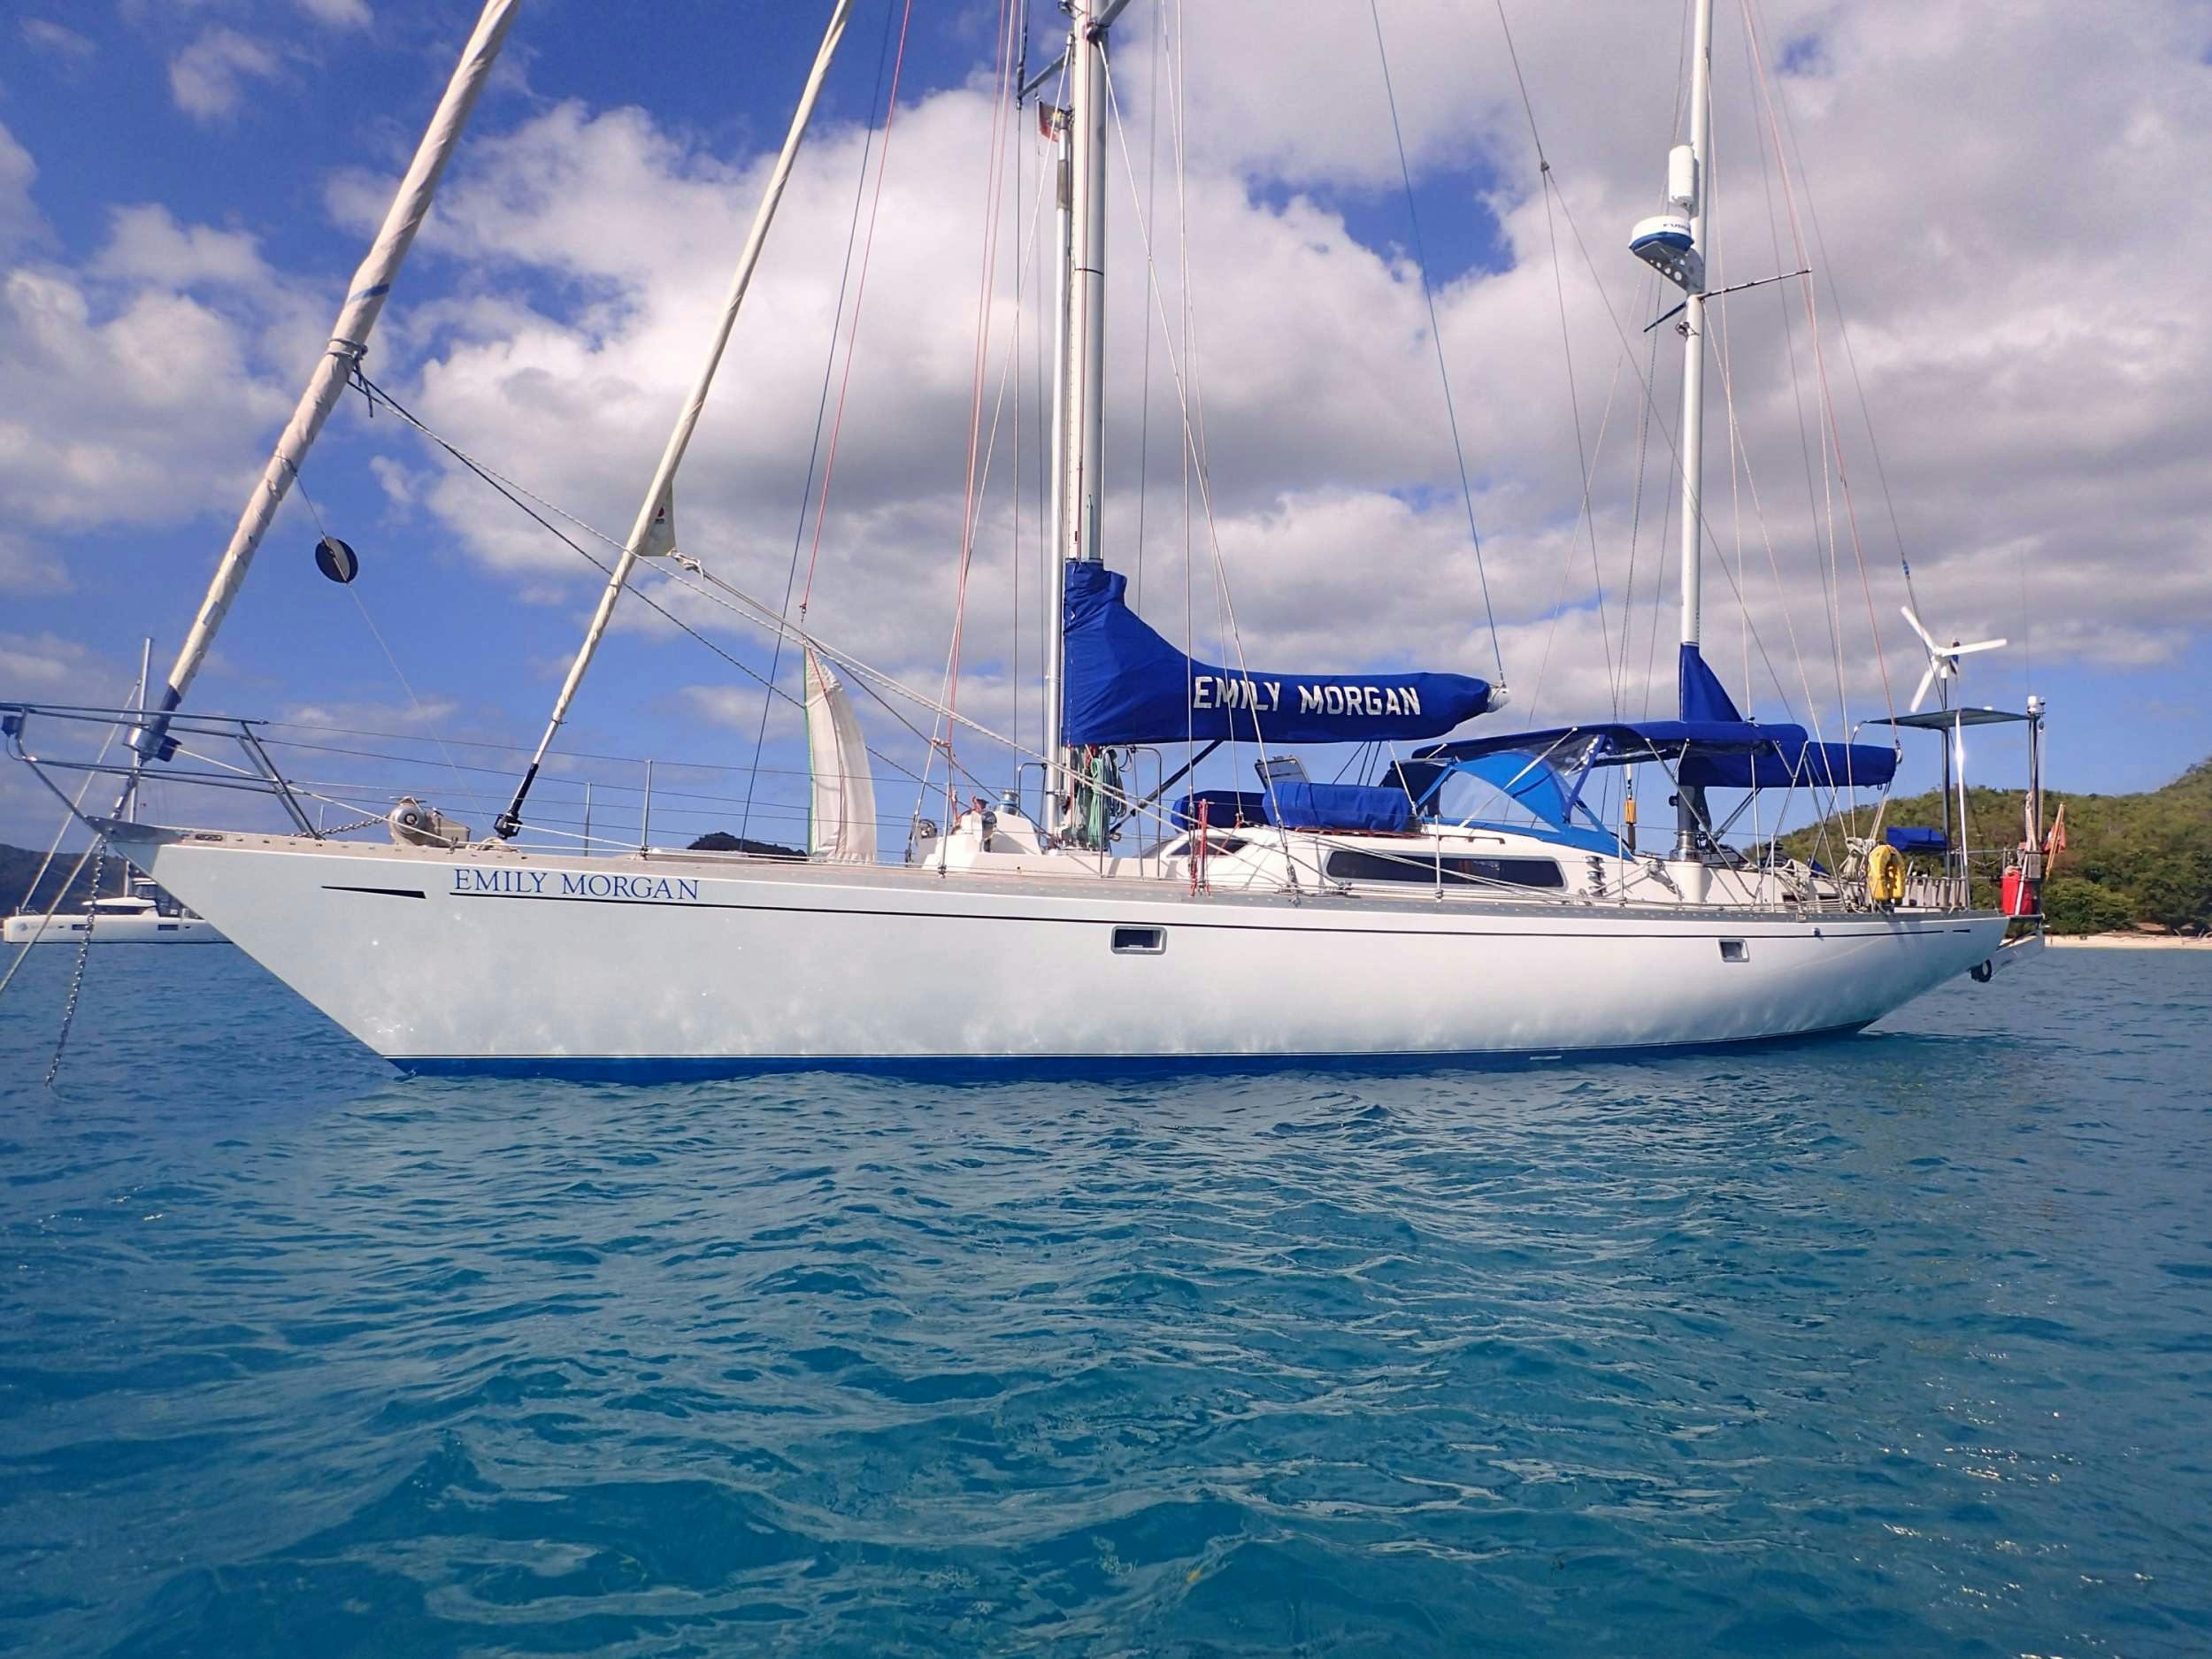 emily morgan - Yacht Charter Kolding & Boat hire in Northern EU, Caribbean 1